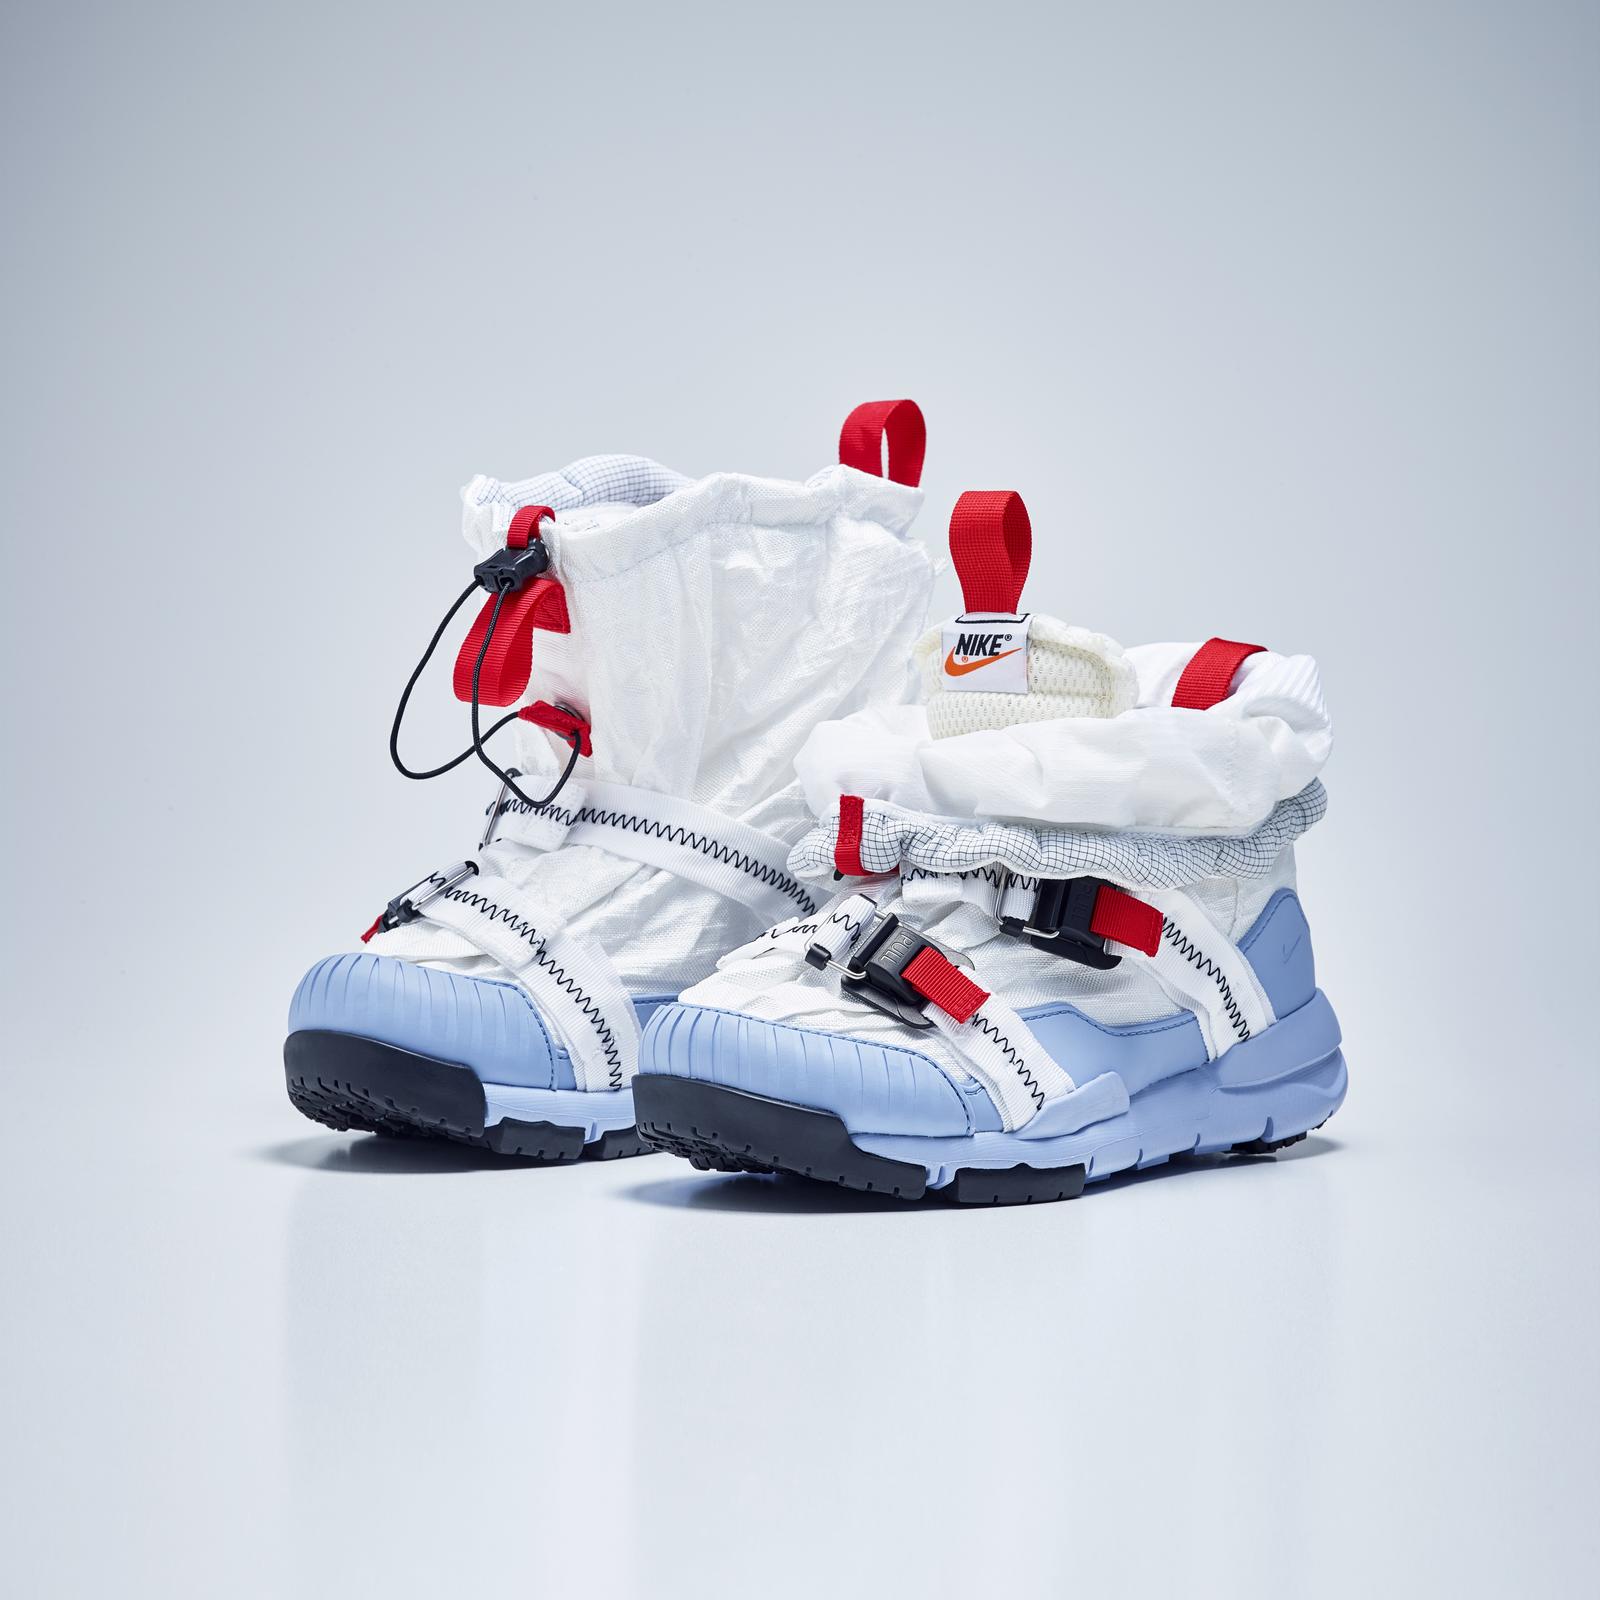 Nike x Tom Sachs "Mars Yard Overshoe"